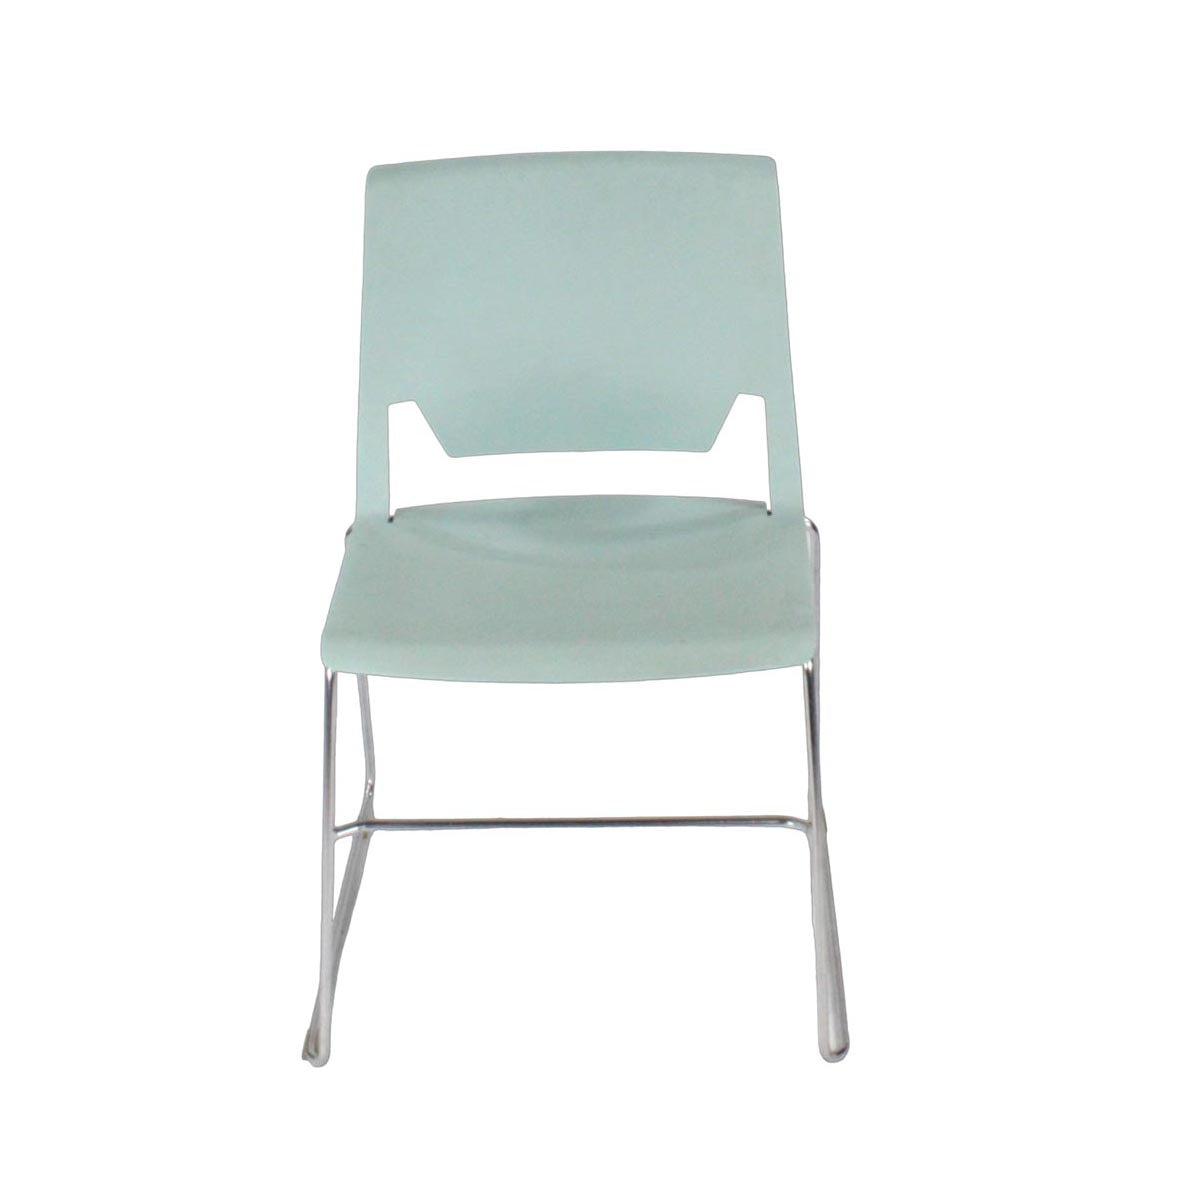 Haworth: Very Comforto 62 Chair in Blue - Refurbished